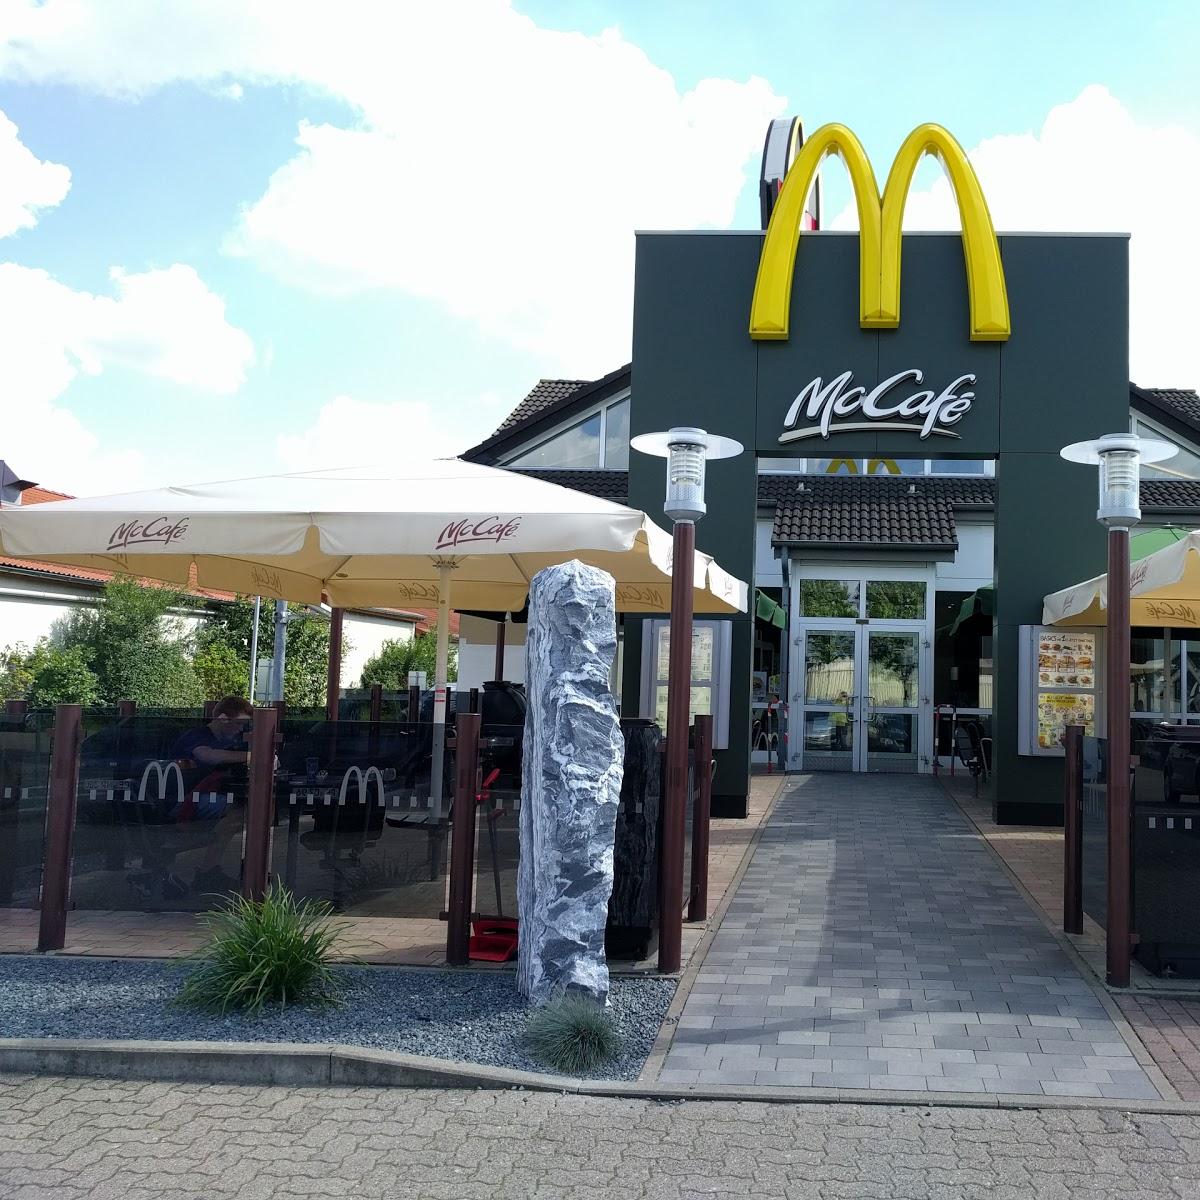 Restaurant "McDonald’s" in Peine